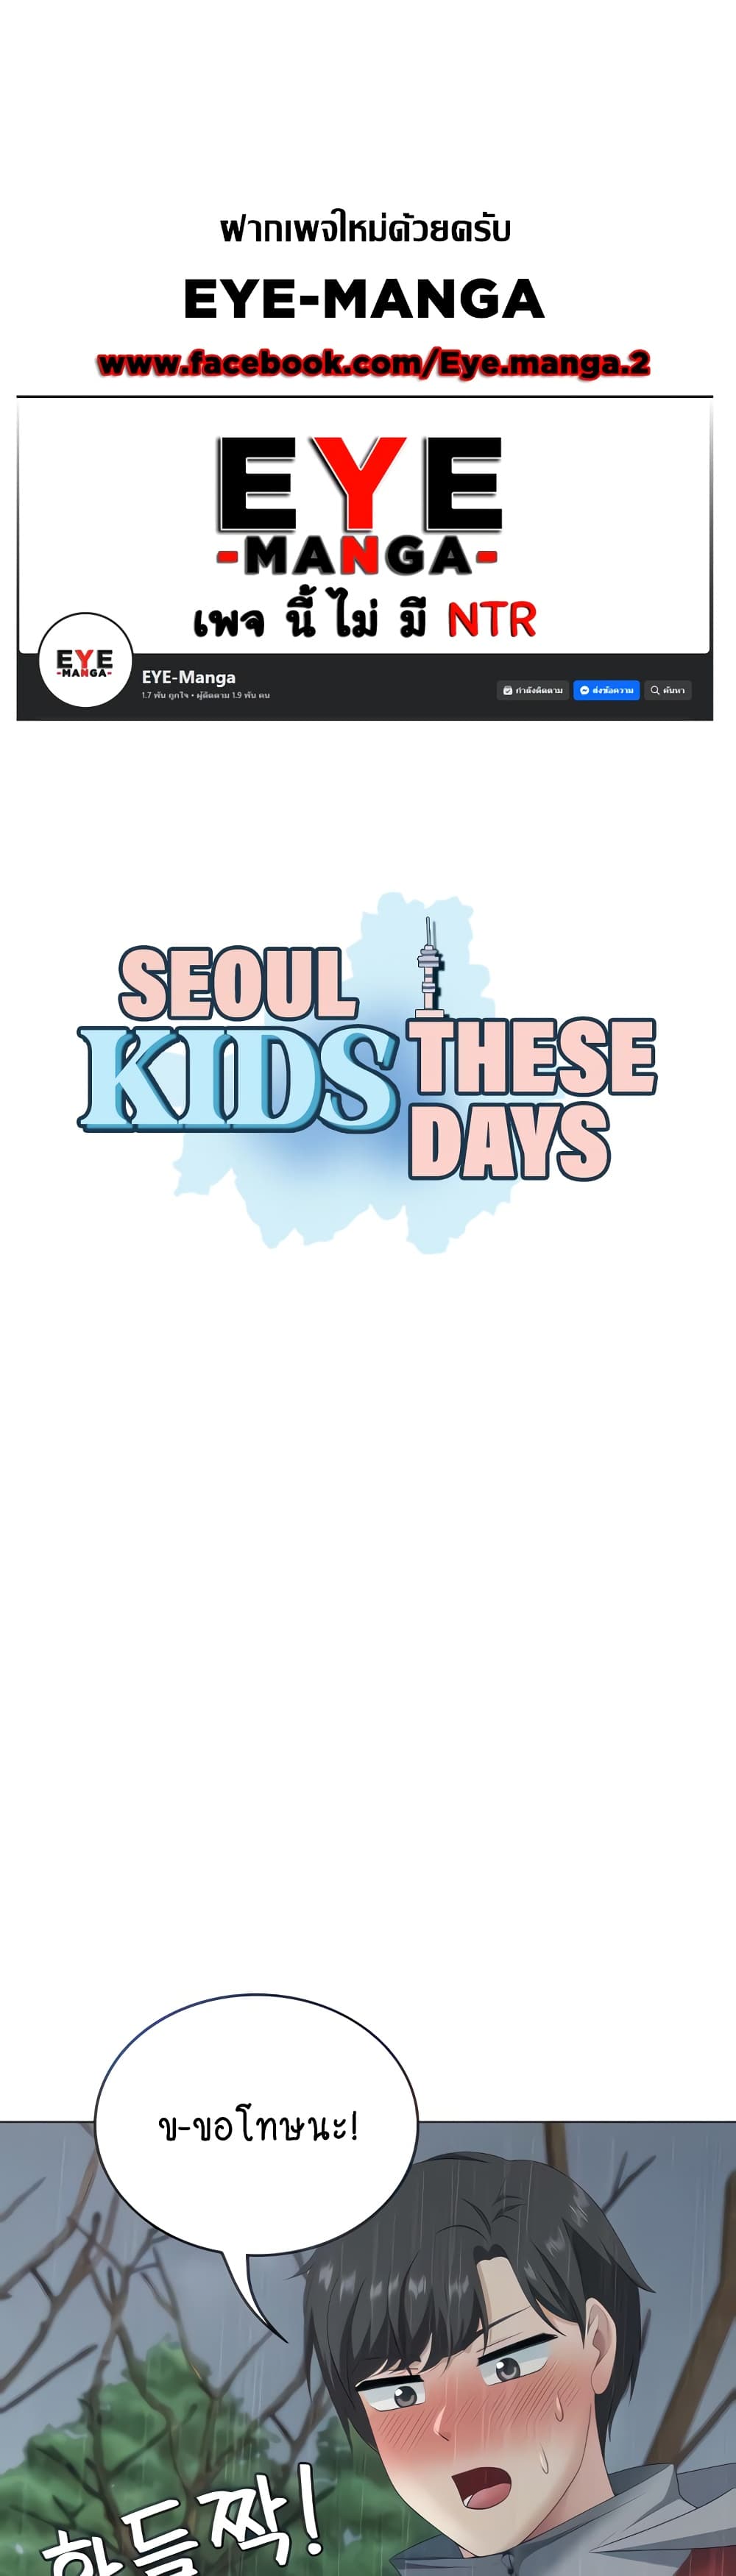 Seoul Kids These Days 19-19